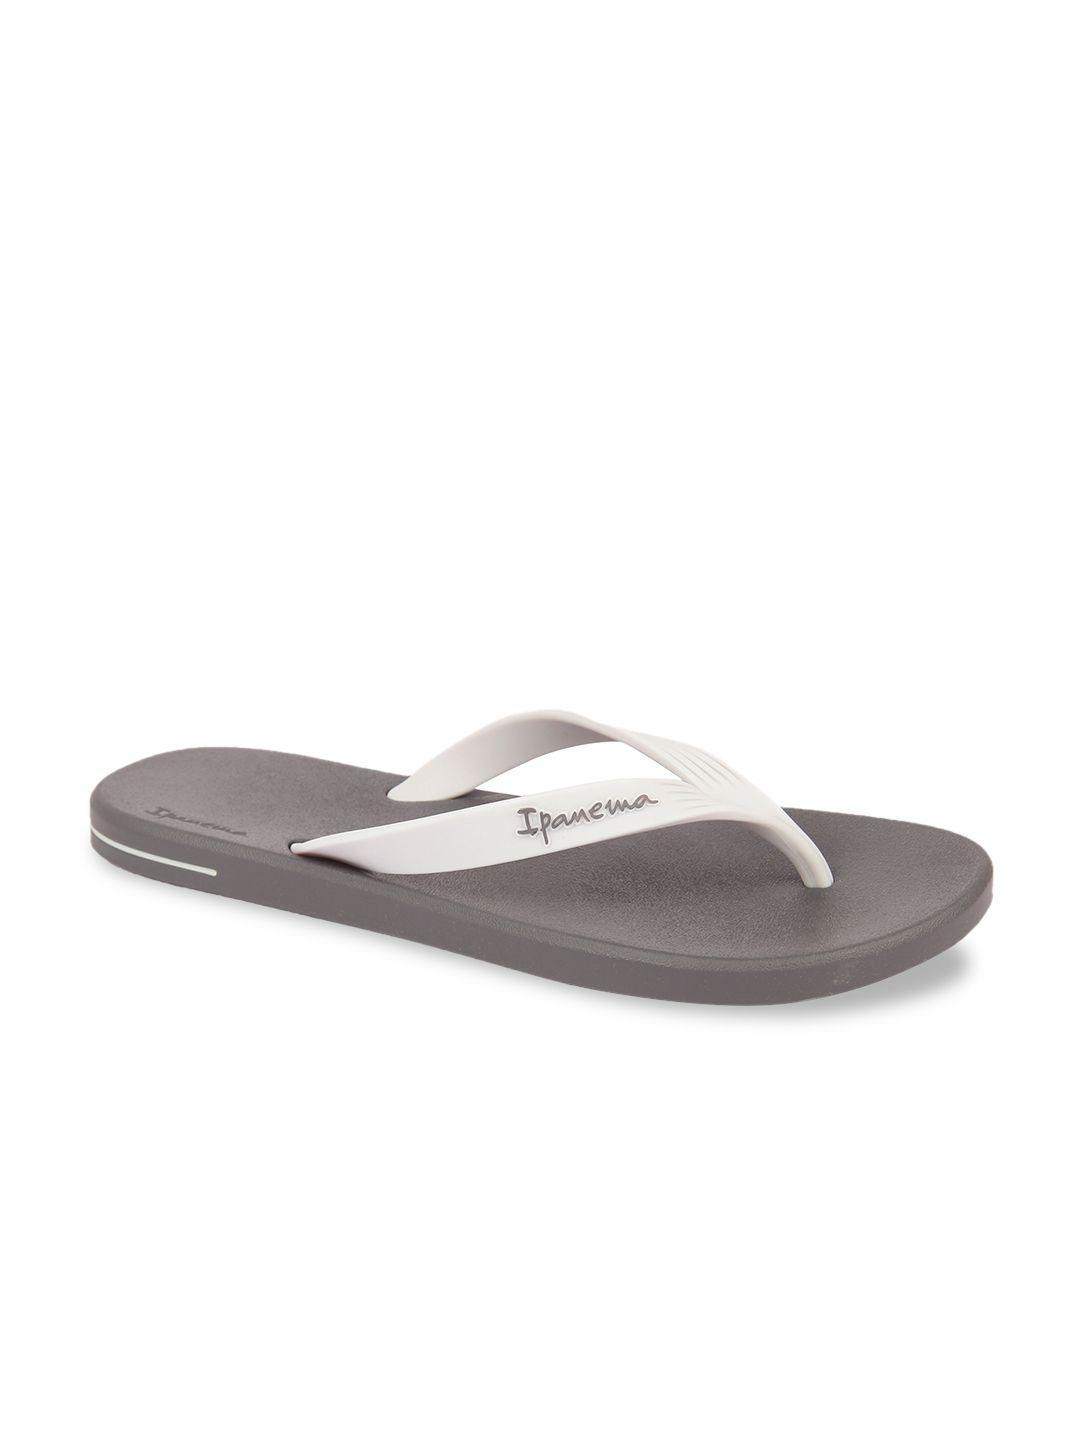 iPanema Men Off-White & Grey Solid Thong Flip-Flops